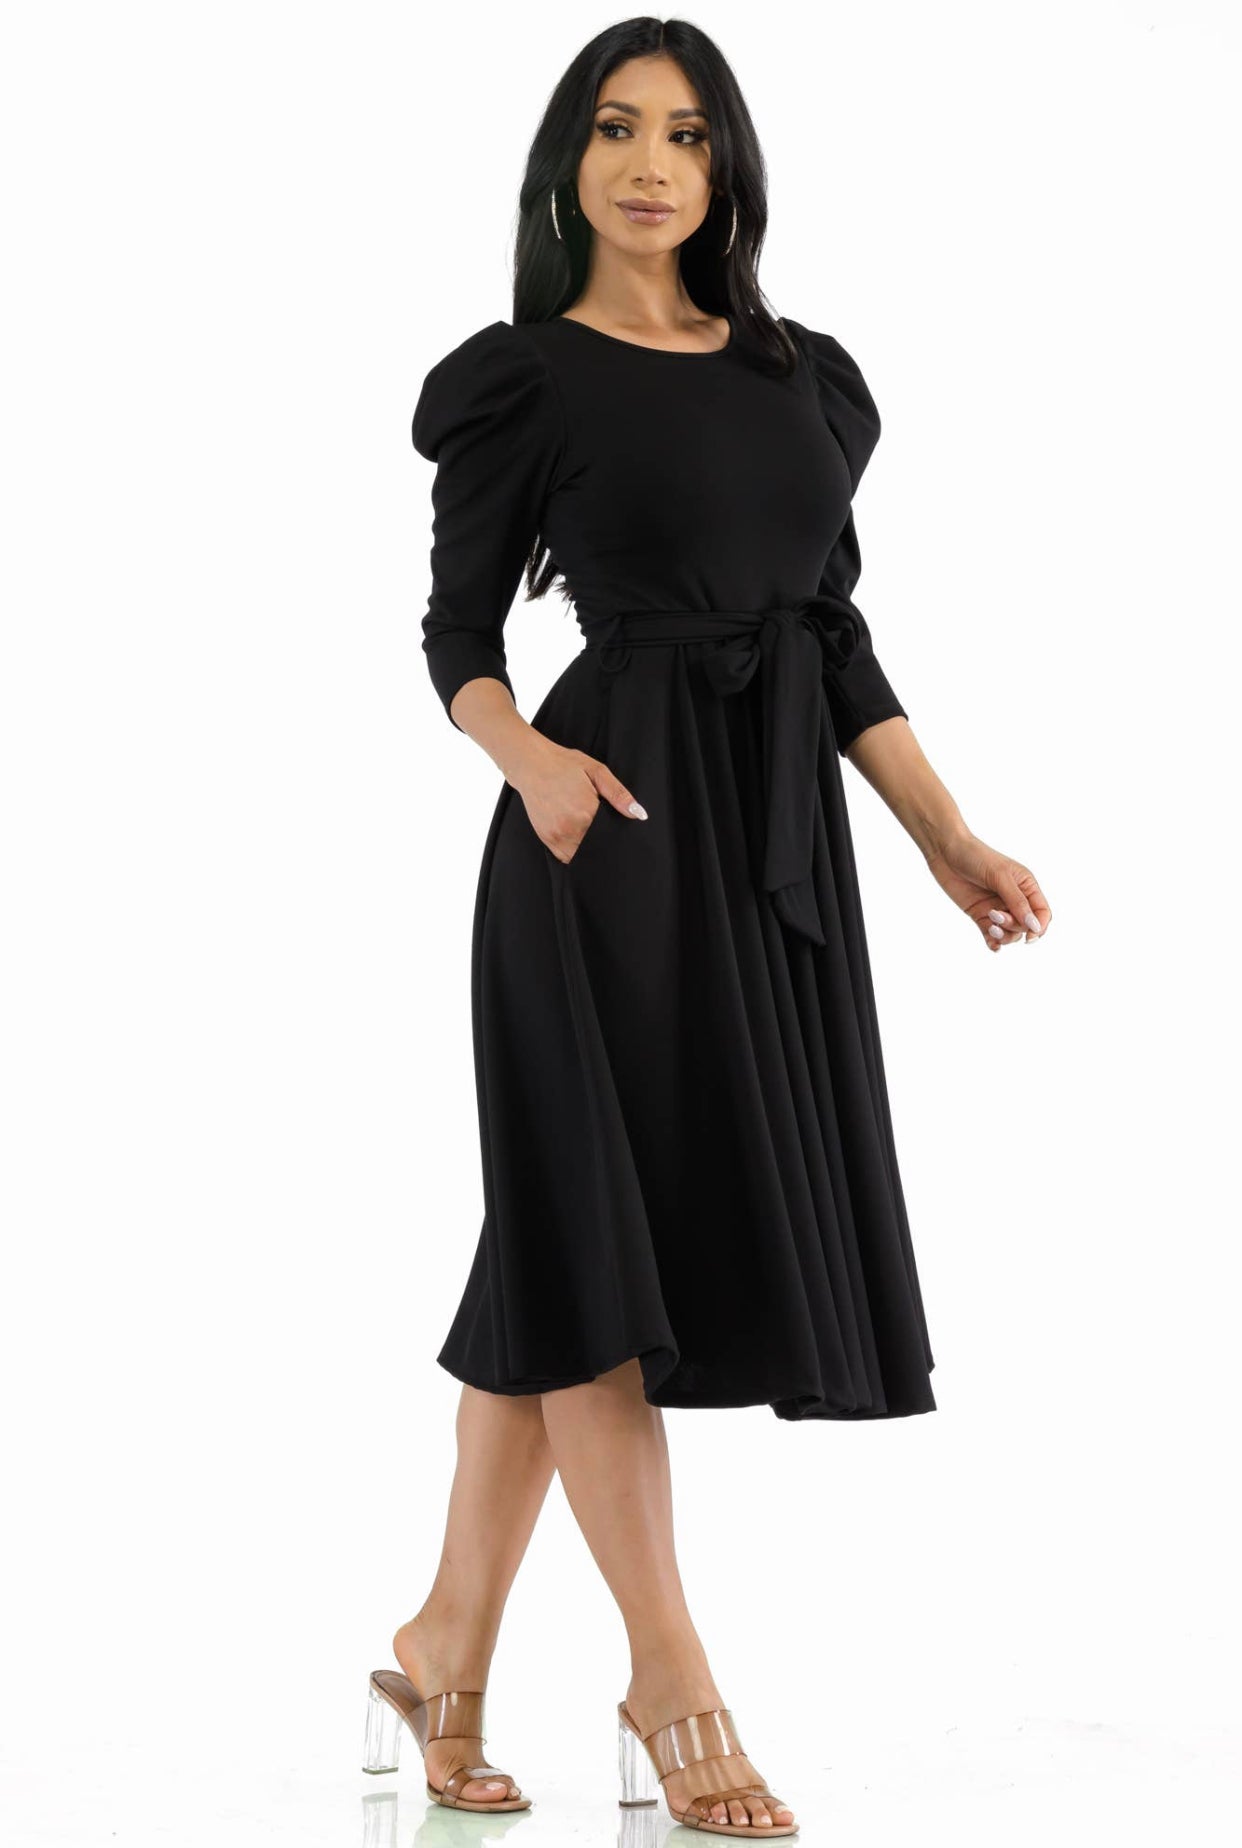 Puff Sleeve Cocktail Dress, Sizes 1X - 3X (Black)